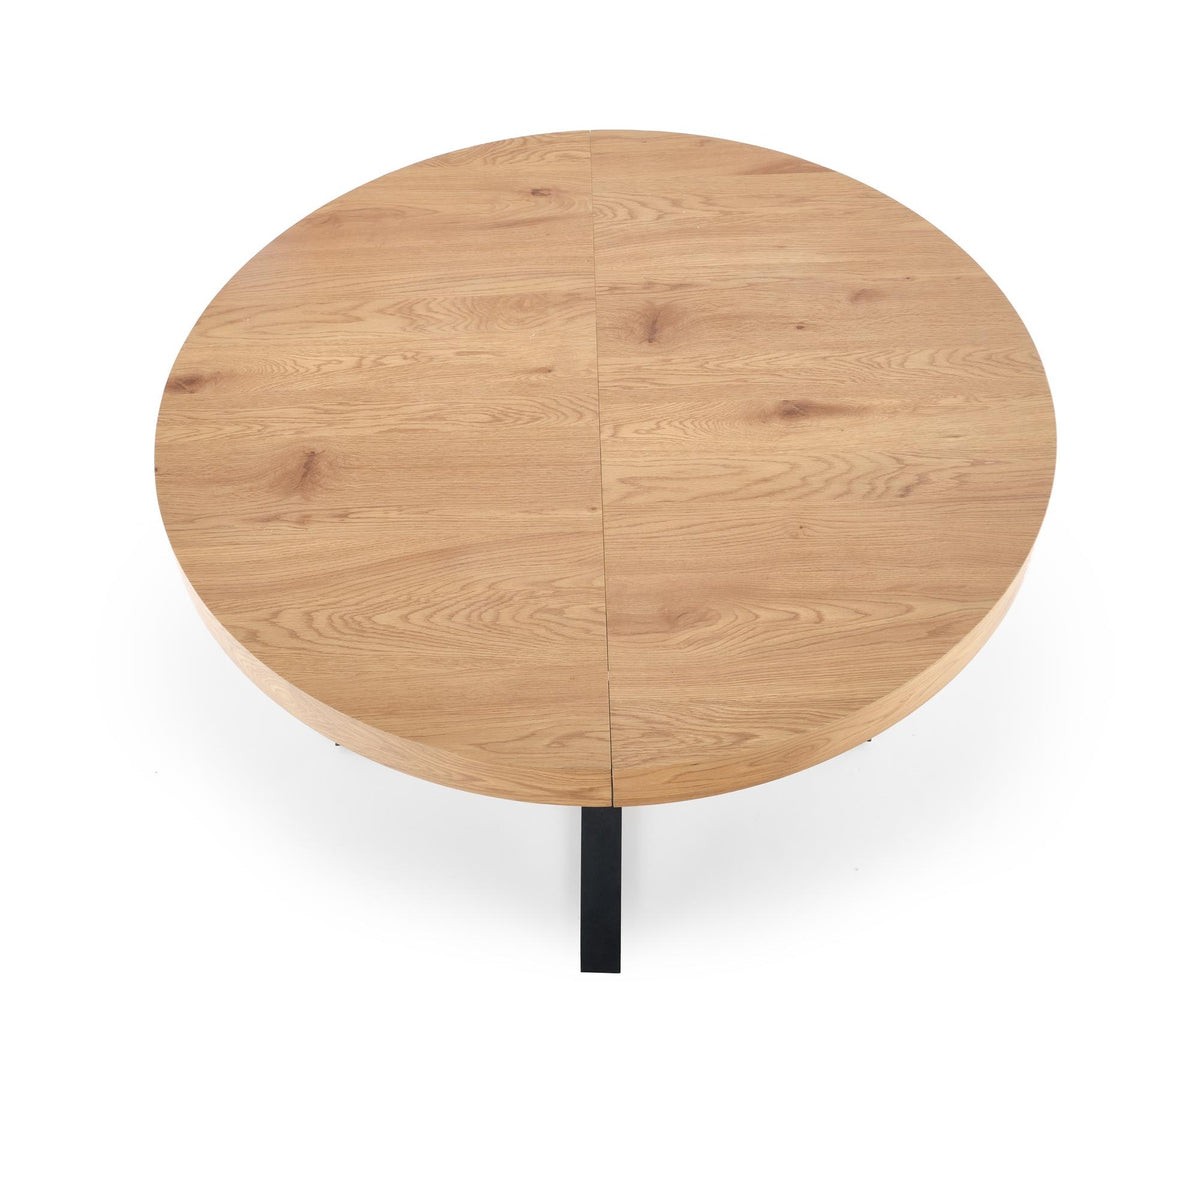 Jedálenský stôl Keroy rozkladacia 120-160x76x120 cm (dub,čierna)